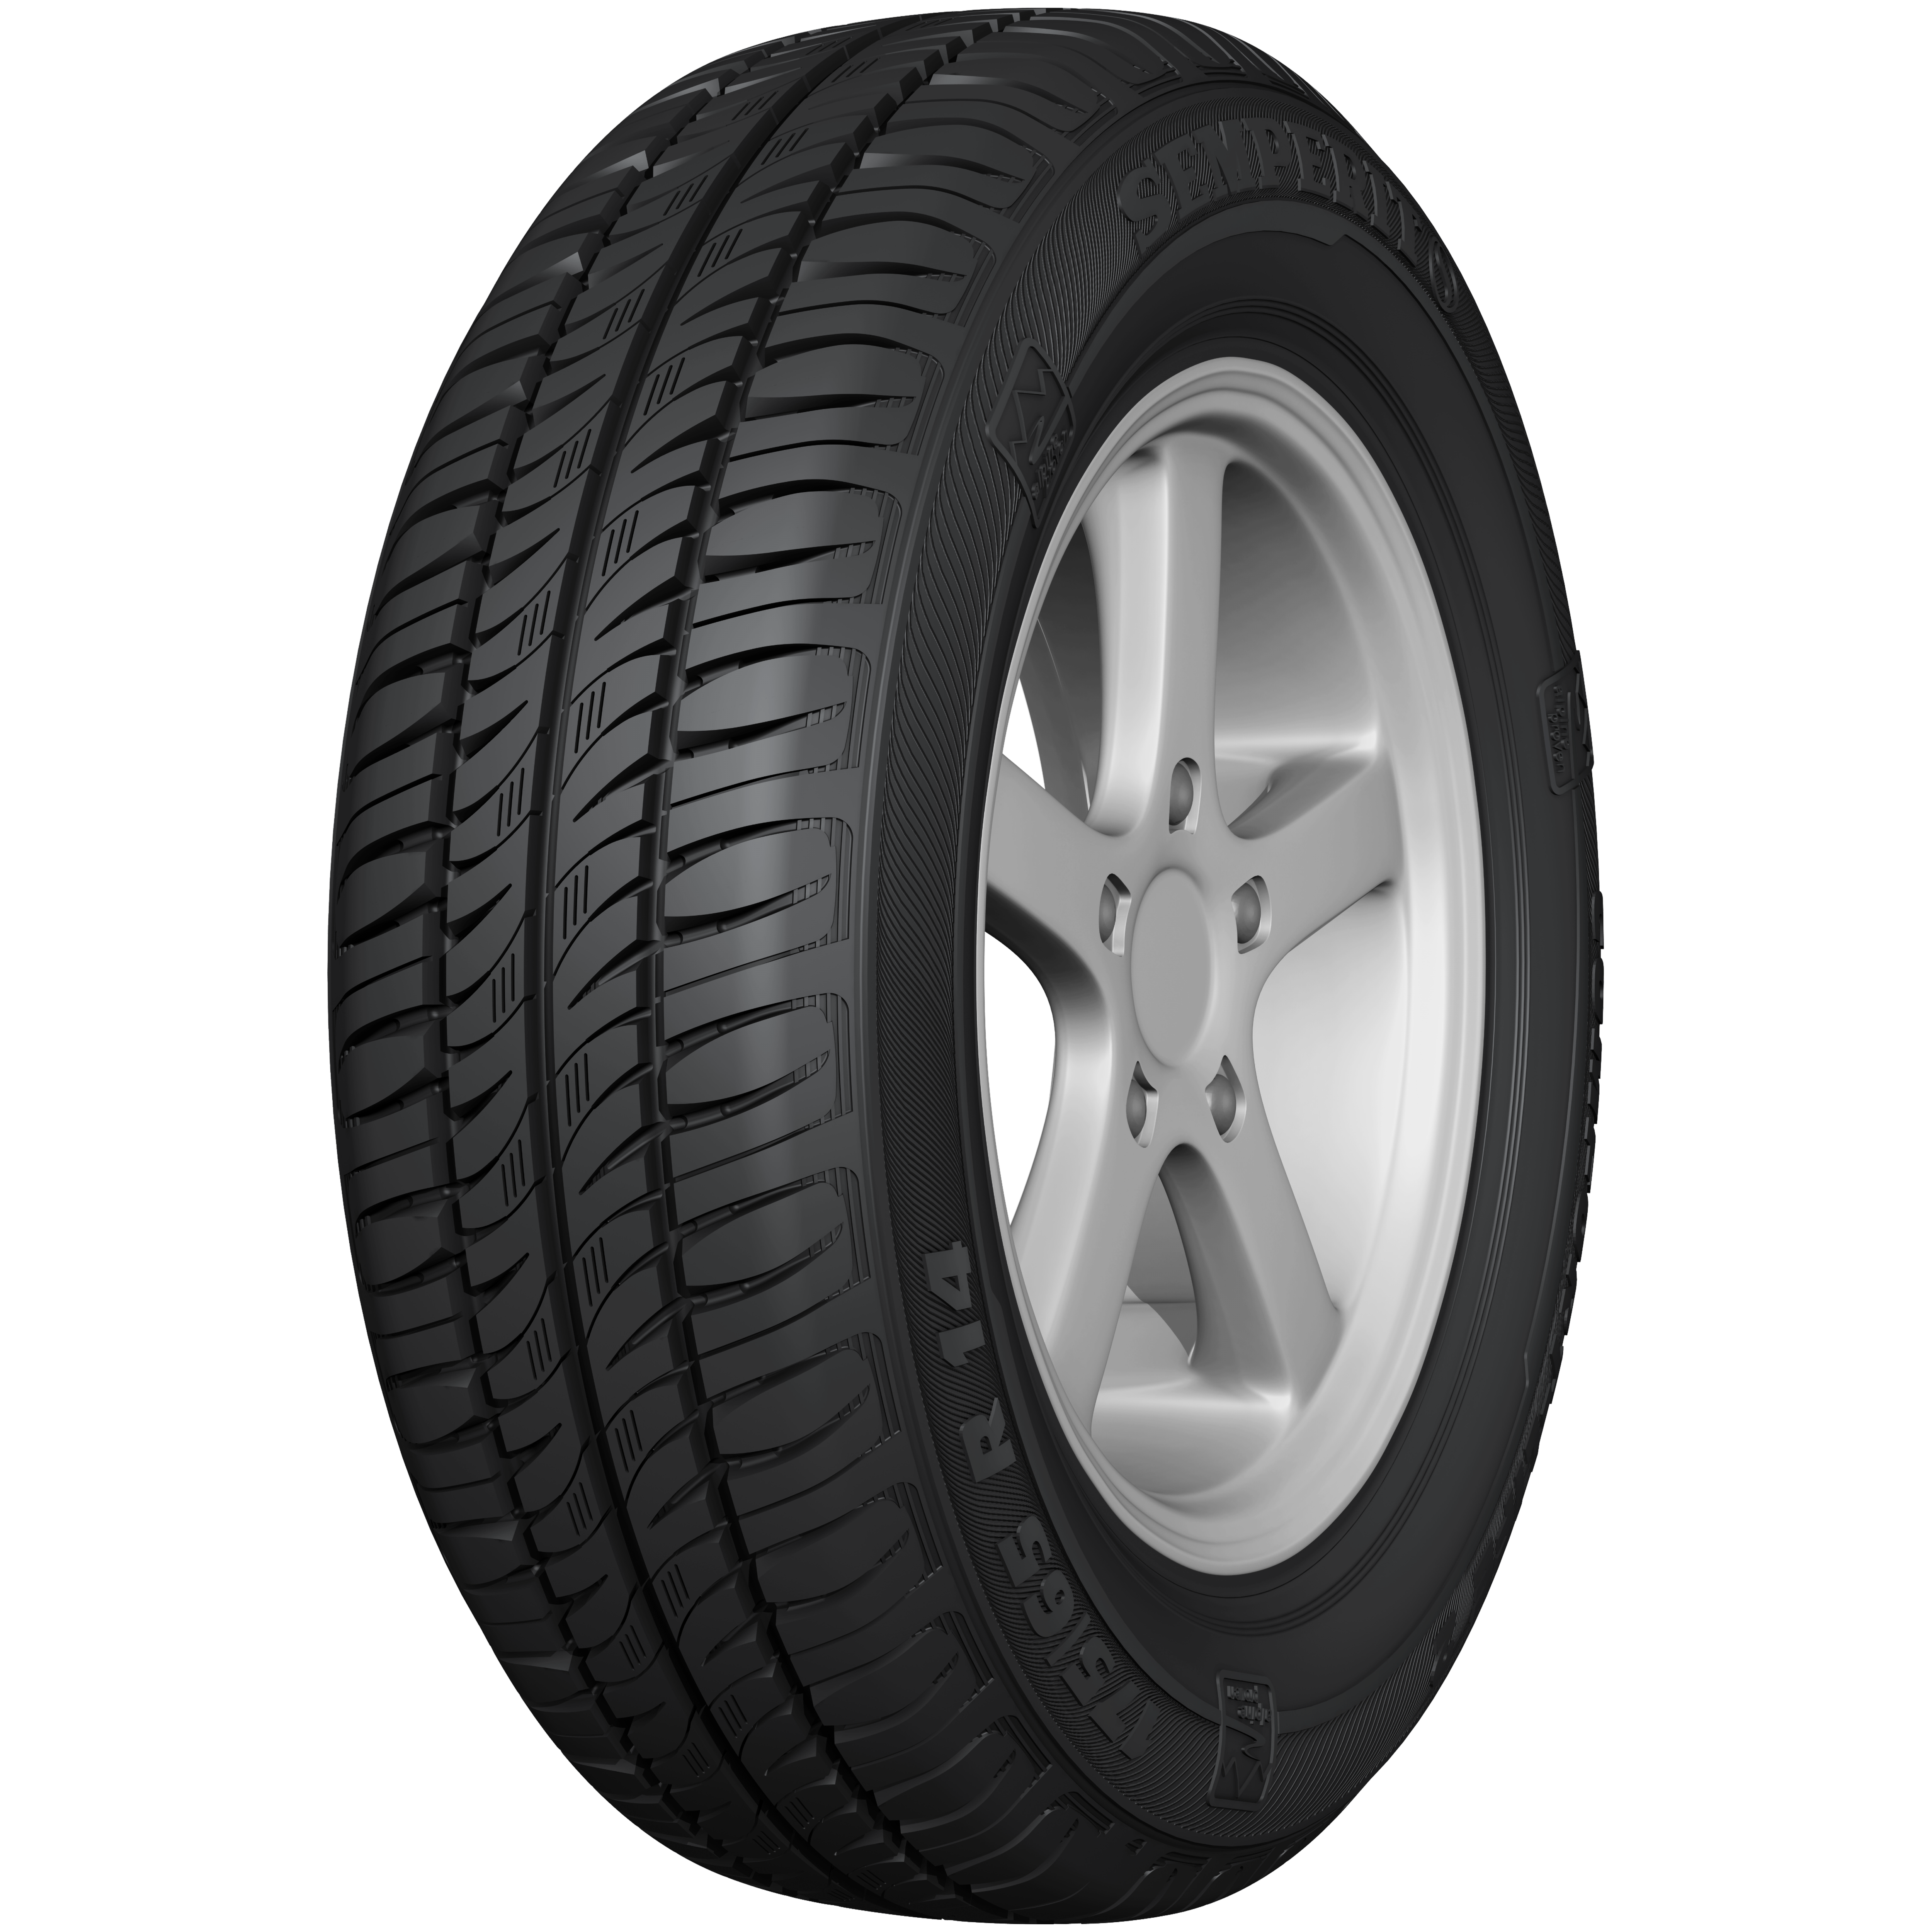 COMFORT-LIFE 2 - The range Semperit | SUVs tyre & & medium compact cars for